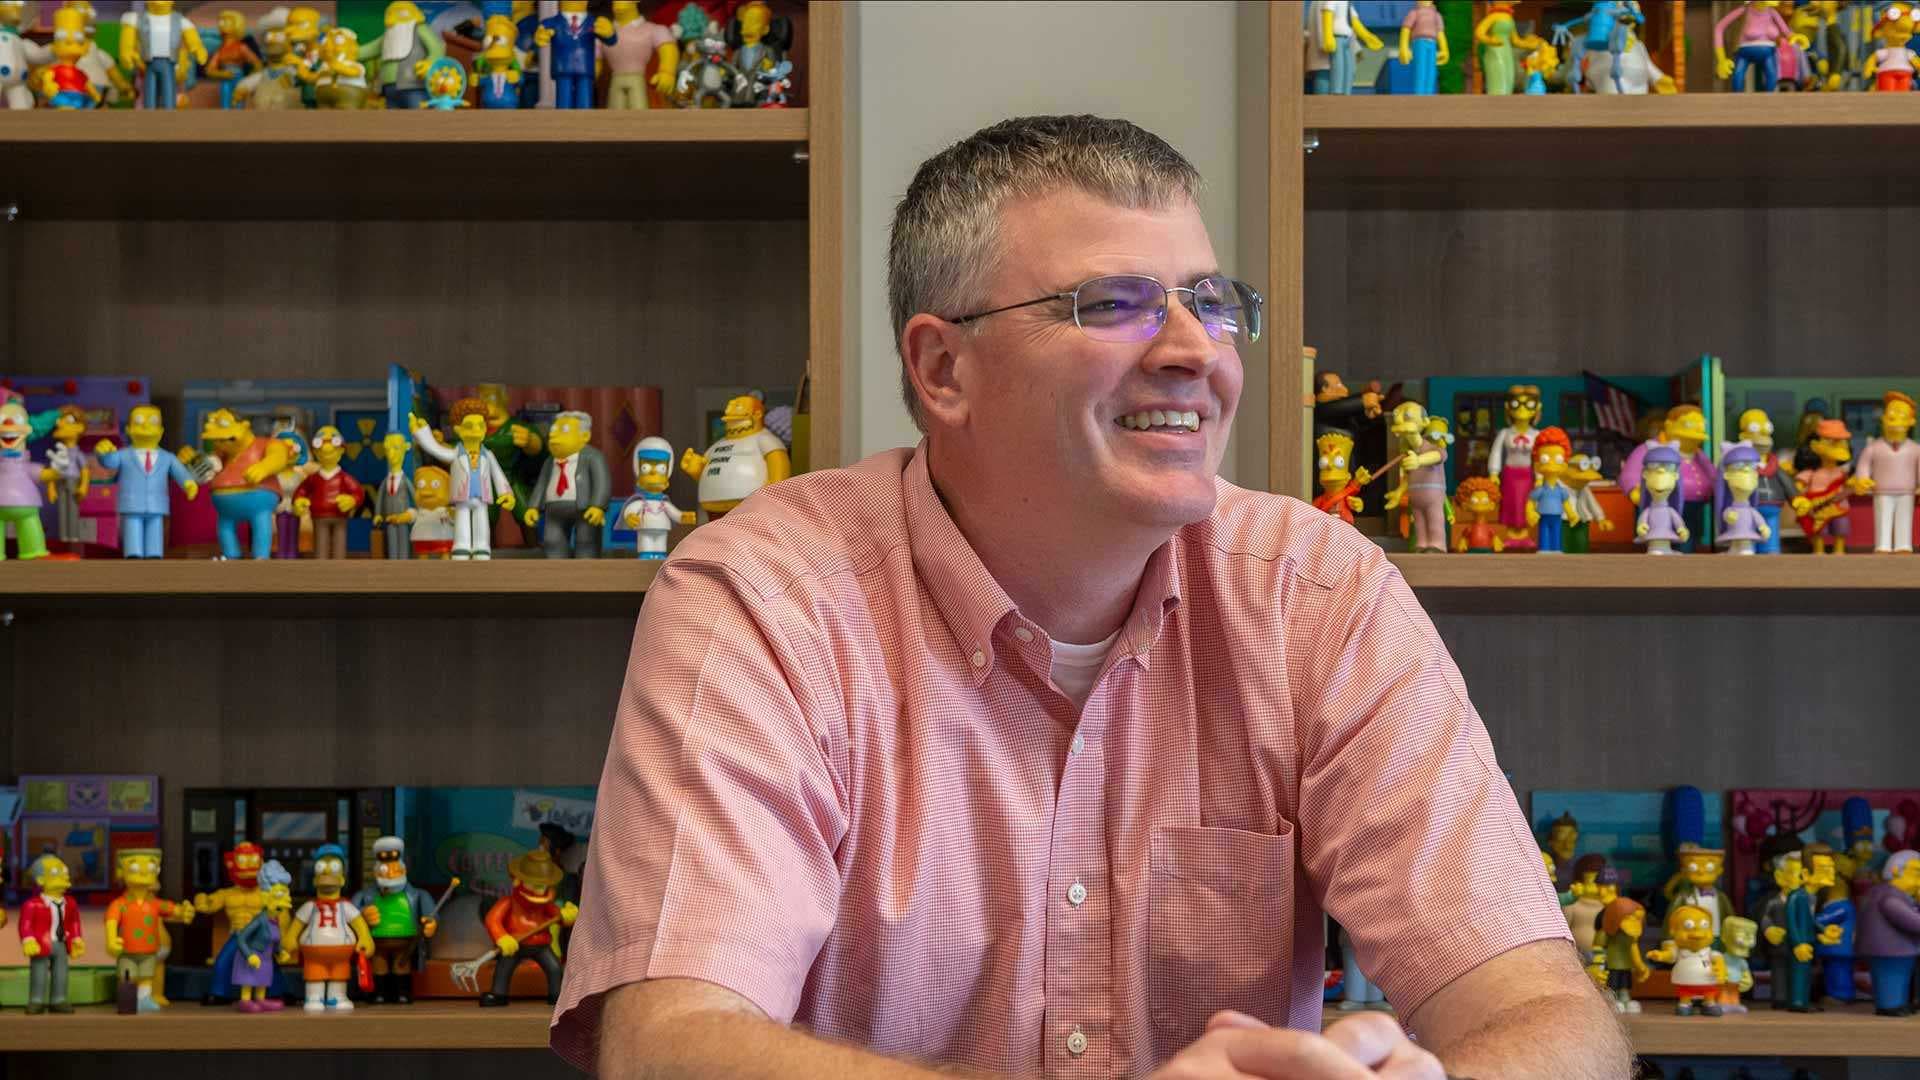 Derek Yarnell sits in front of shelves of Simpsons figurines